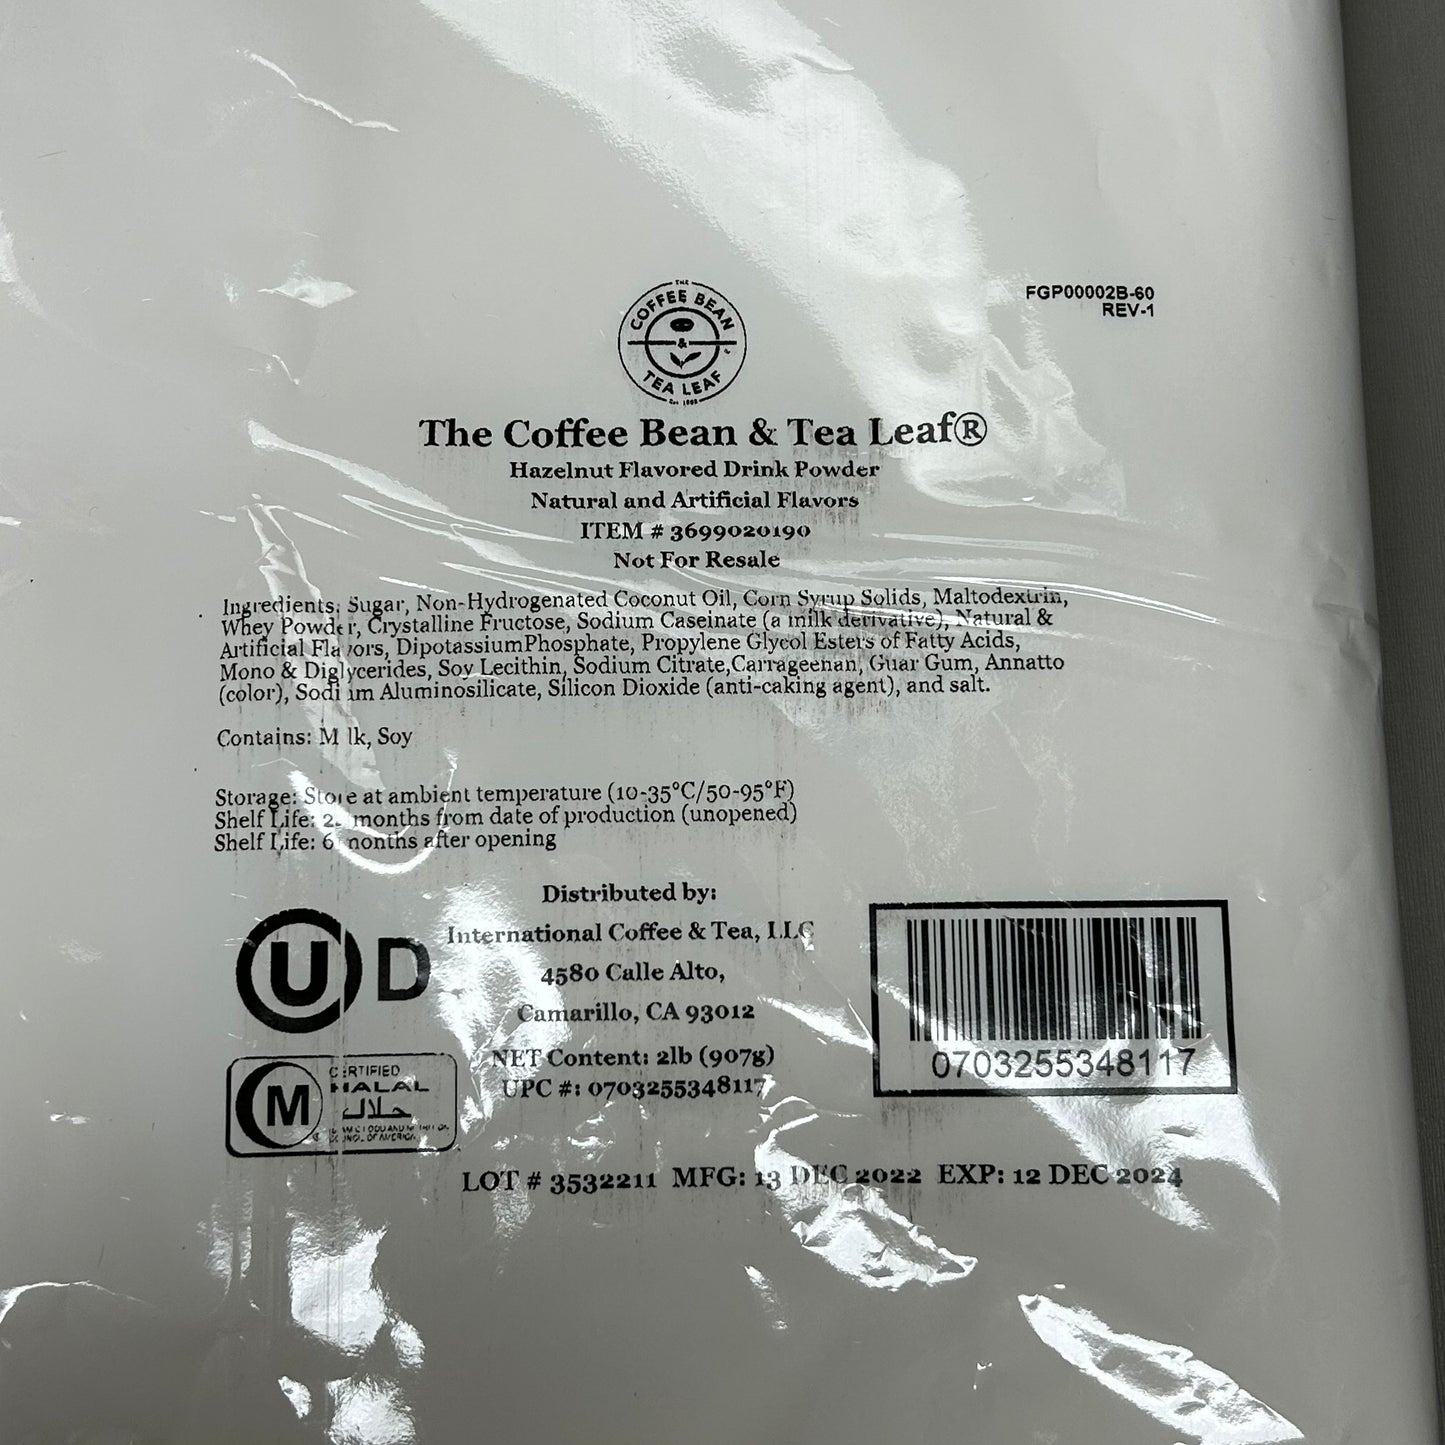 THE COFFEE BEAN & TEA LEAF 5-PACK! Hazelnut Flavored Drink Powder 2 lbs each (New)